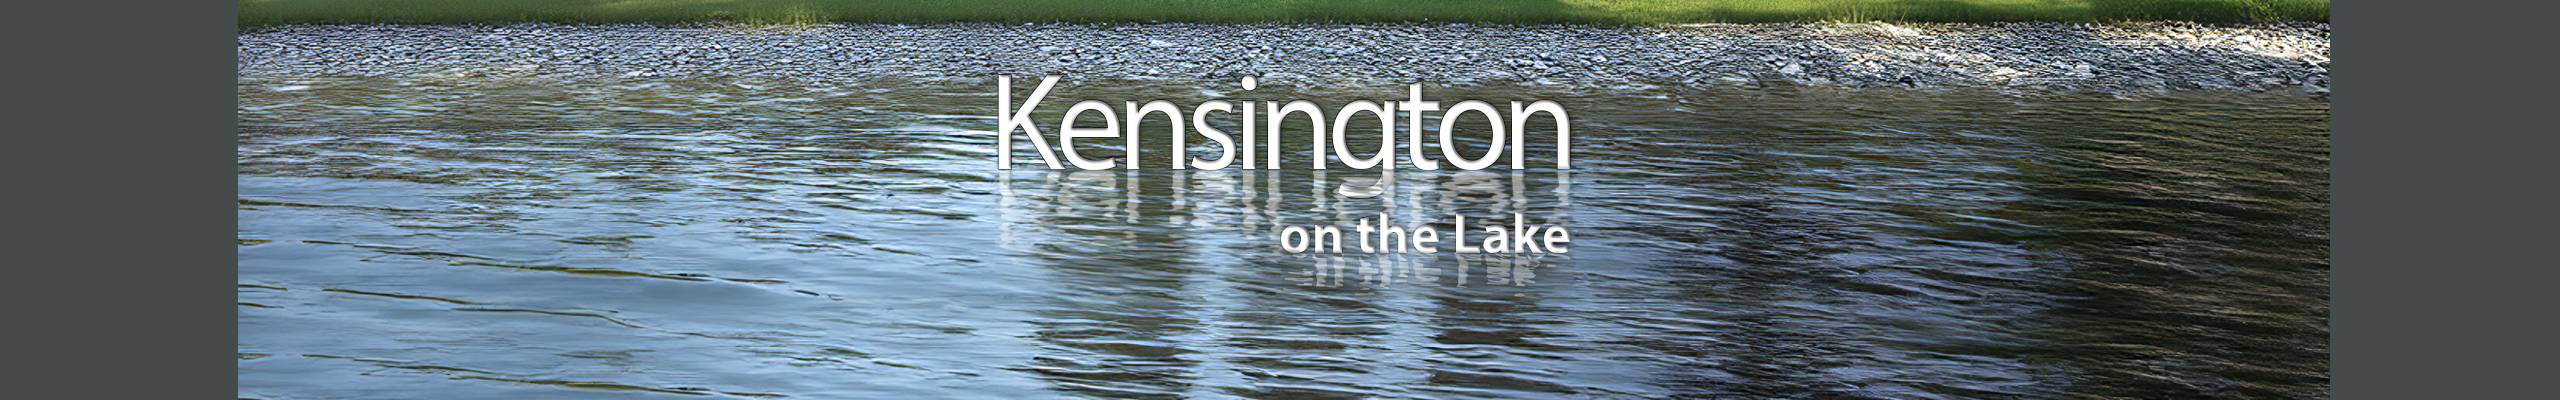 Kensington on the Lake in Blatchford